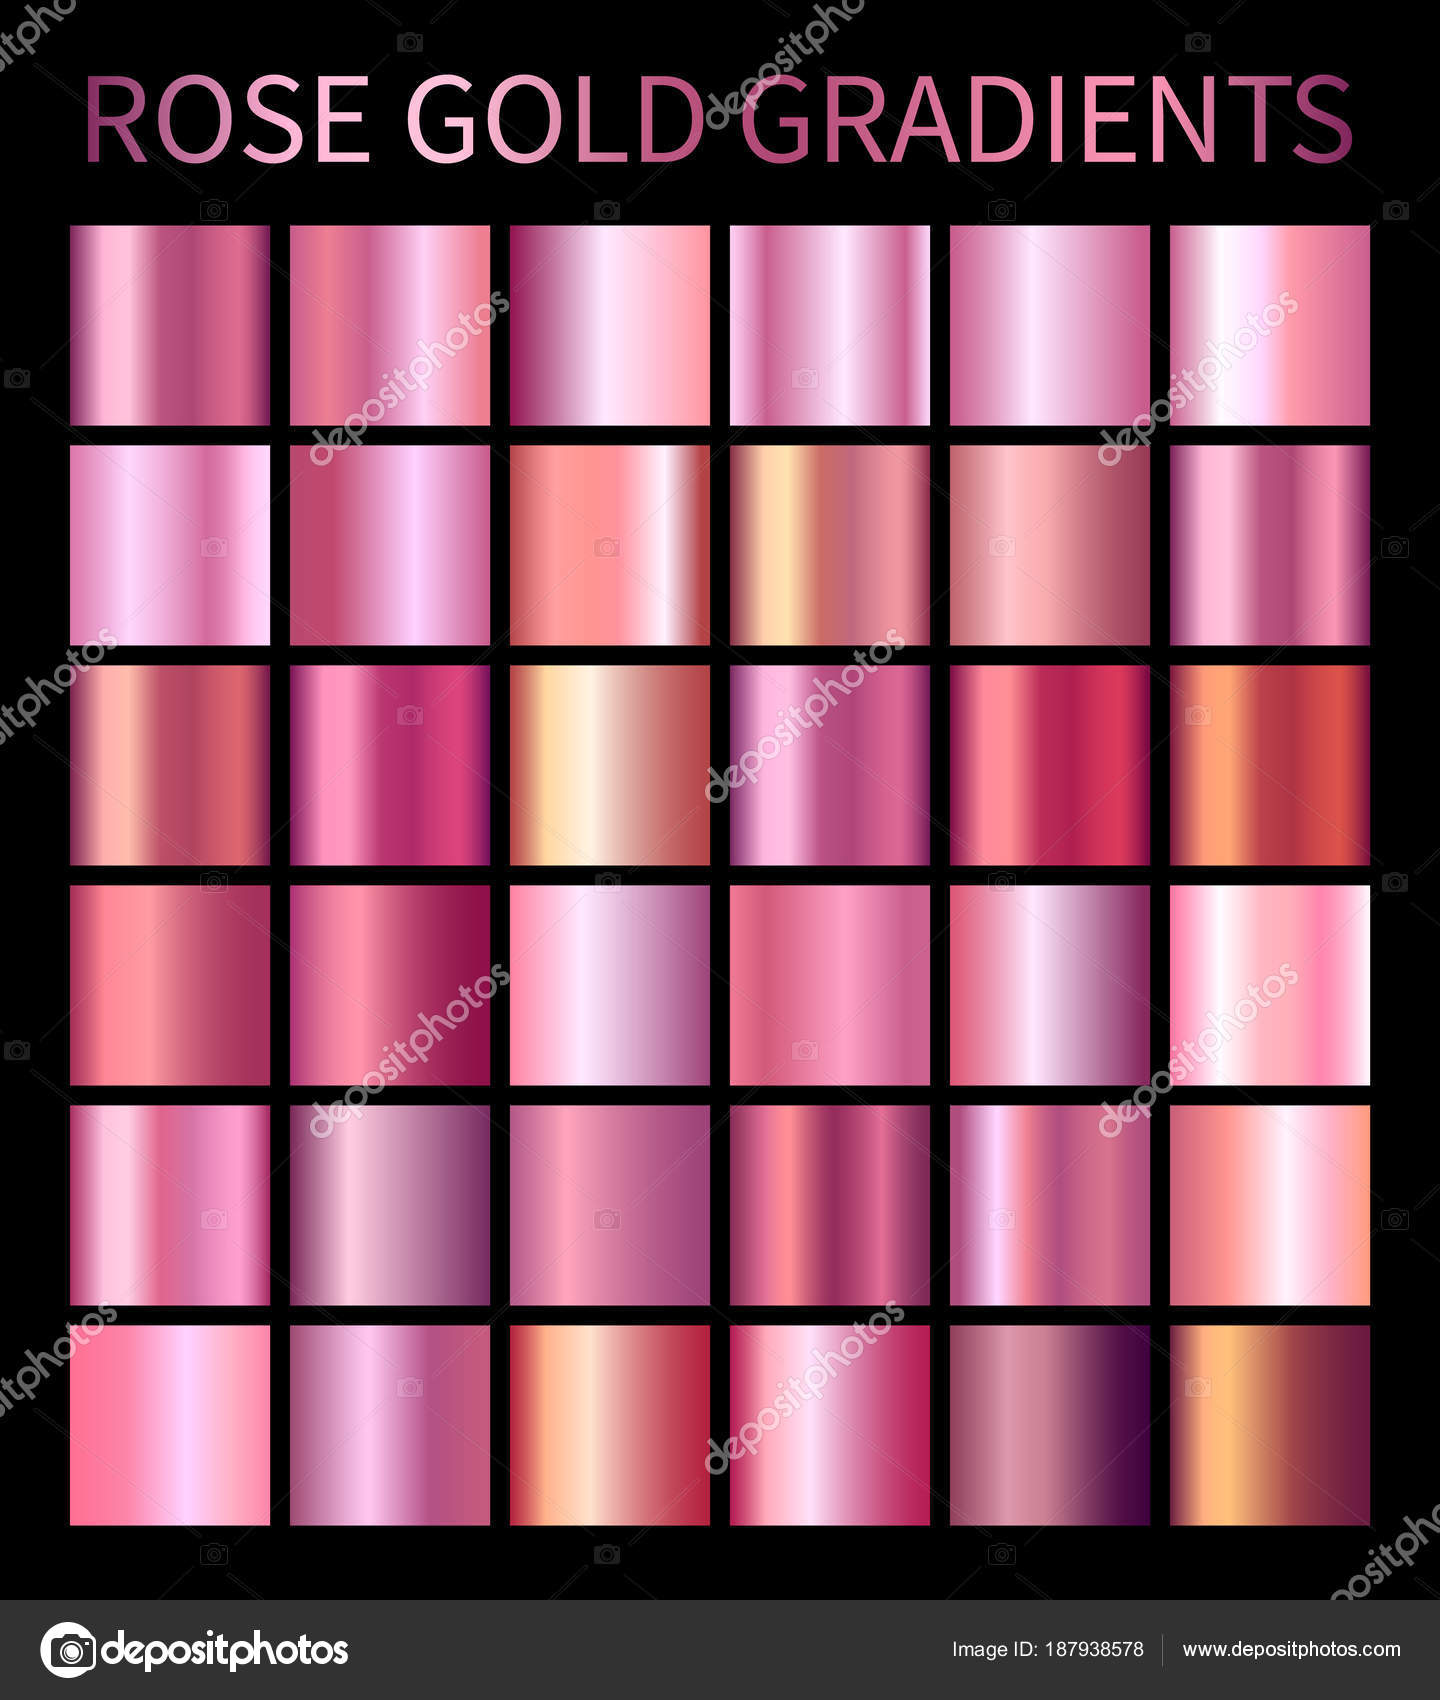 Rose gold gradient Vector Art Stock Images | Depositphotos